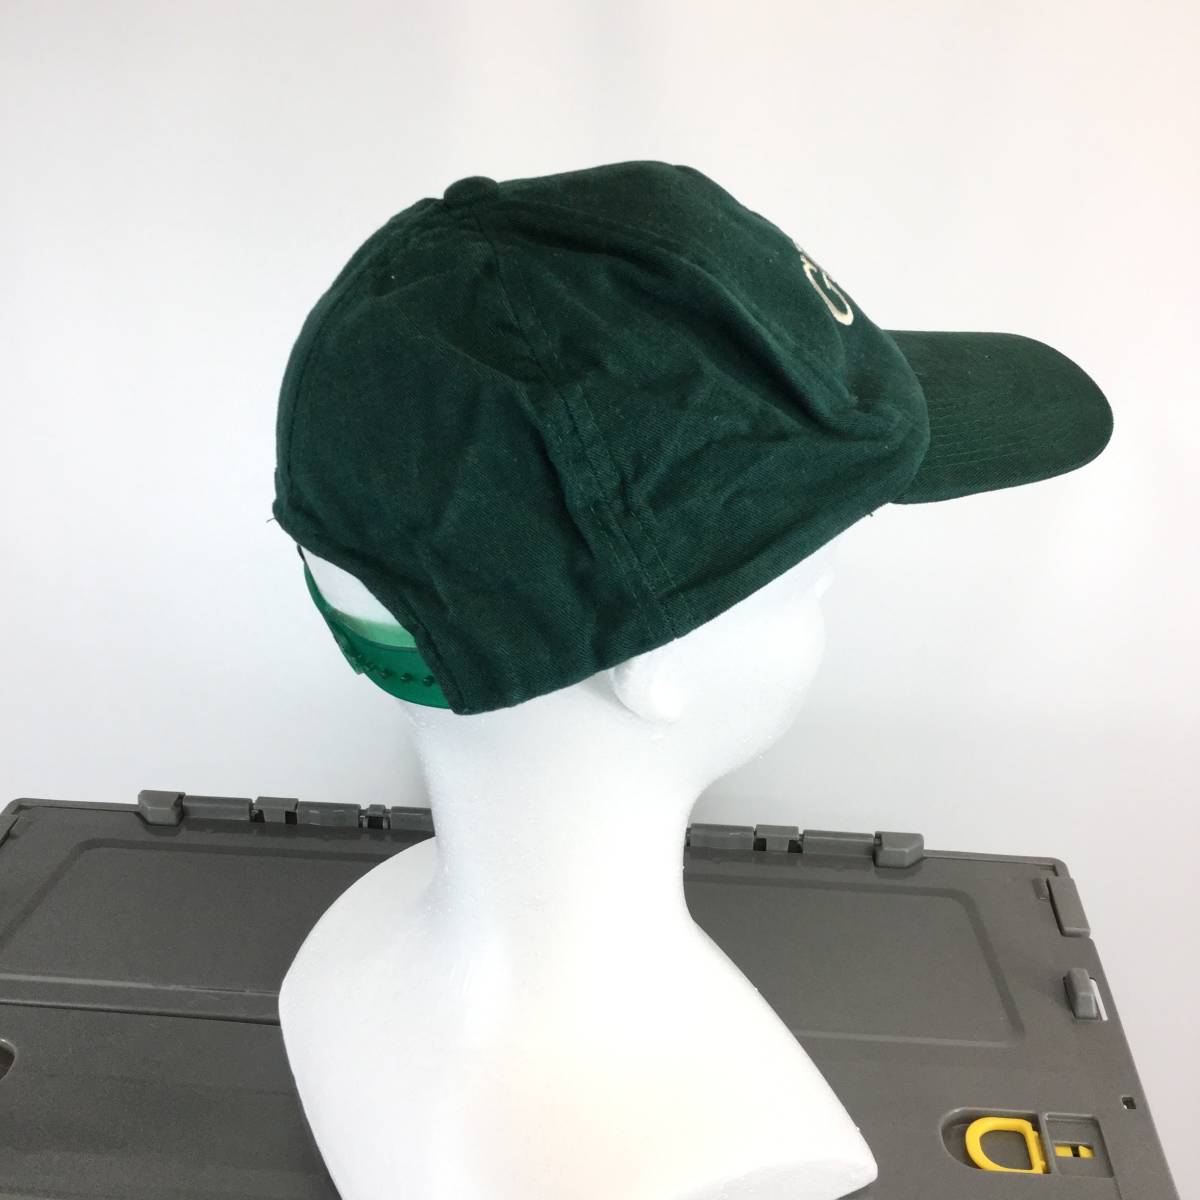 90s GUESS USA Guess 6 panel колпак шляпа зеленый свободный размер 